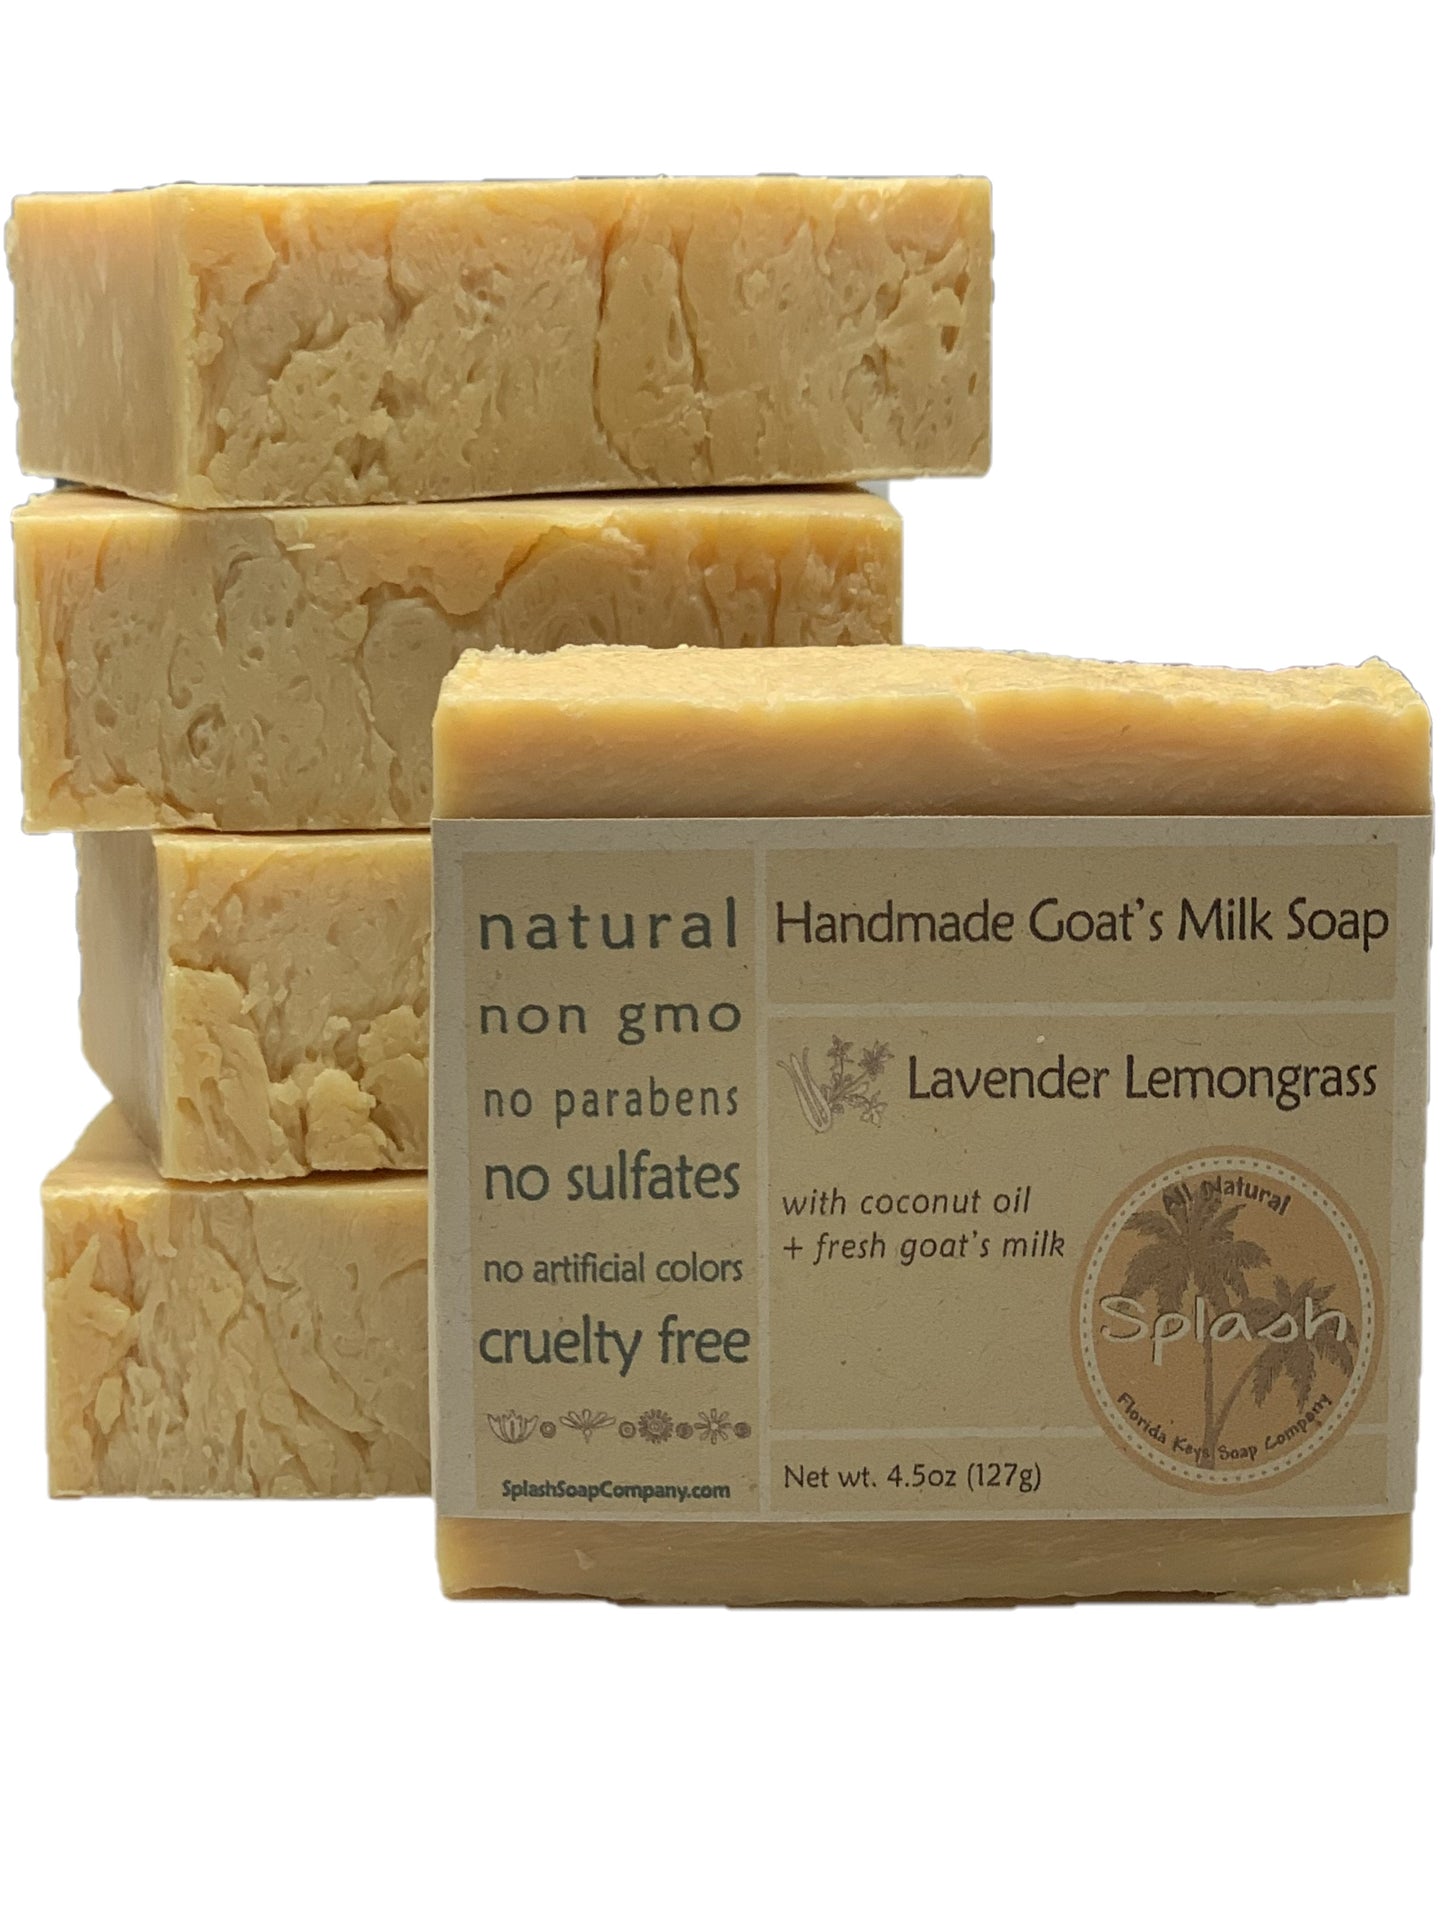 Lavender Lemongrass - Splash Soap Company